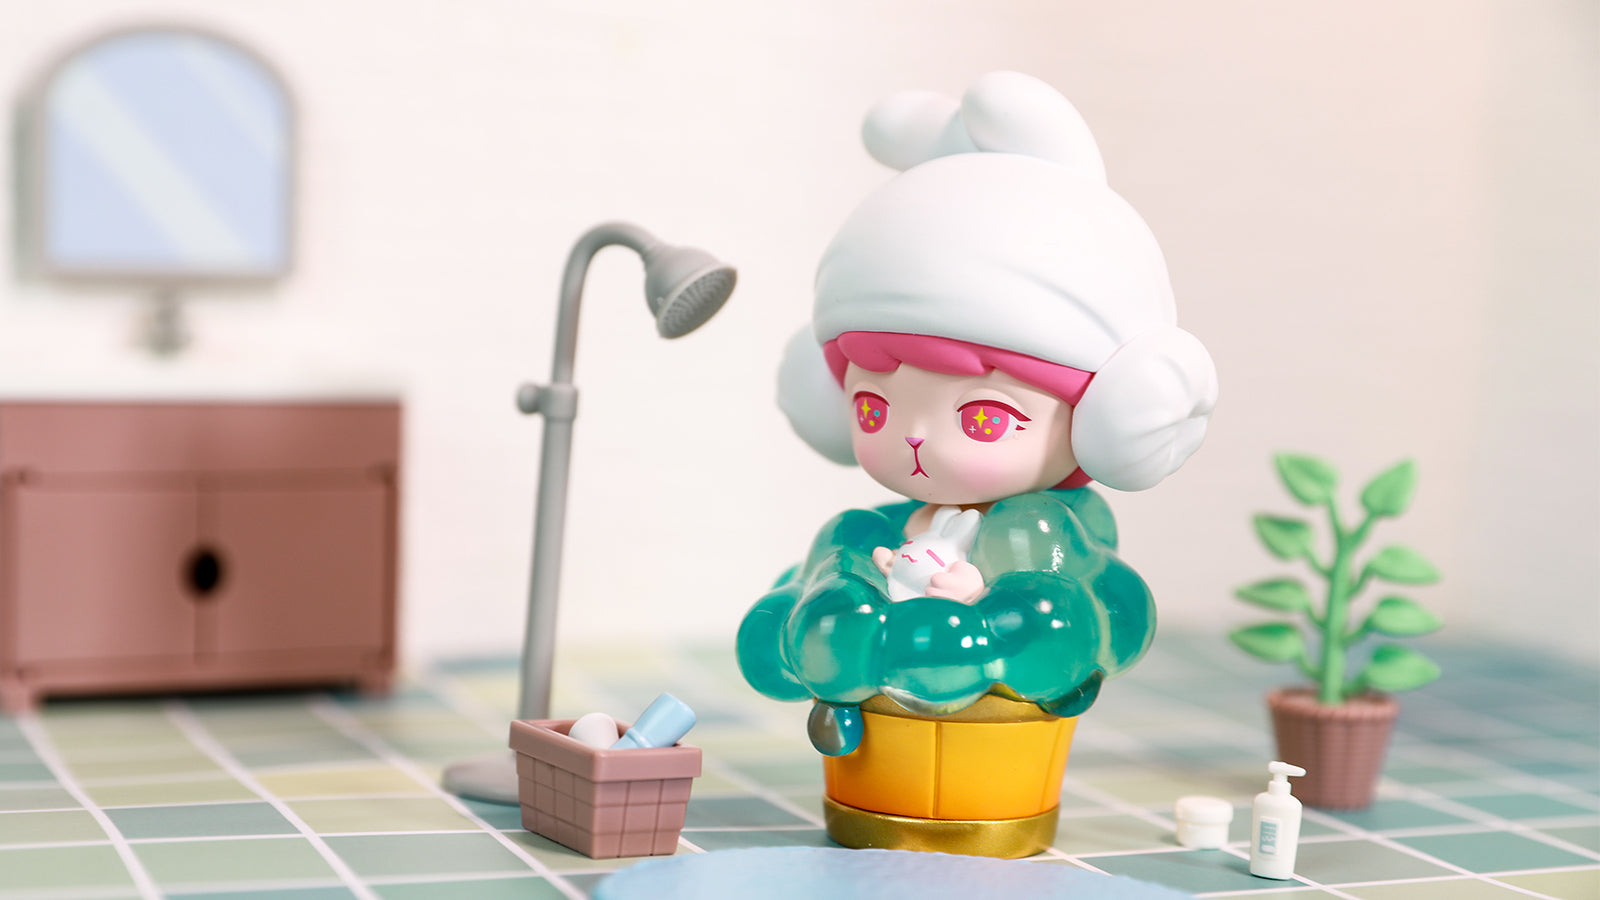 Details about   POP MART x BUNNY Winter Series Bucket Bath Mini Figure Designer Art Toy Figurine 